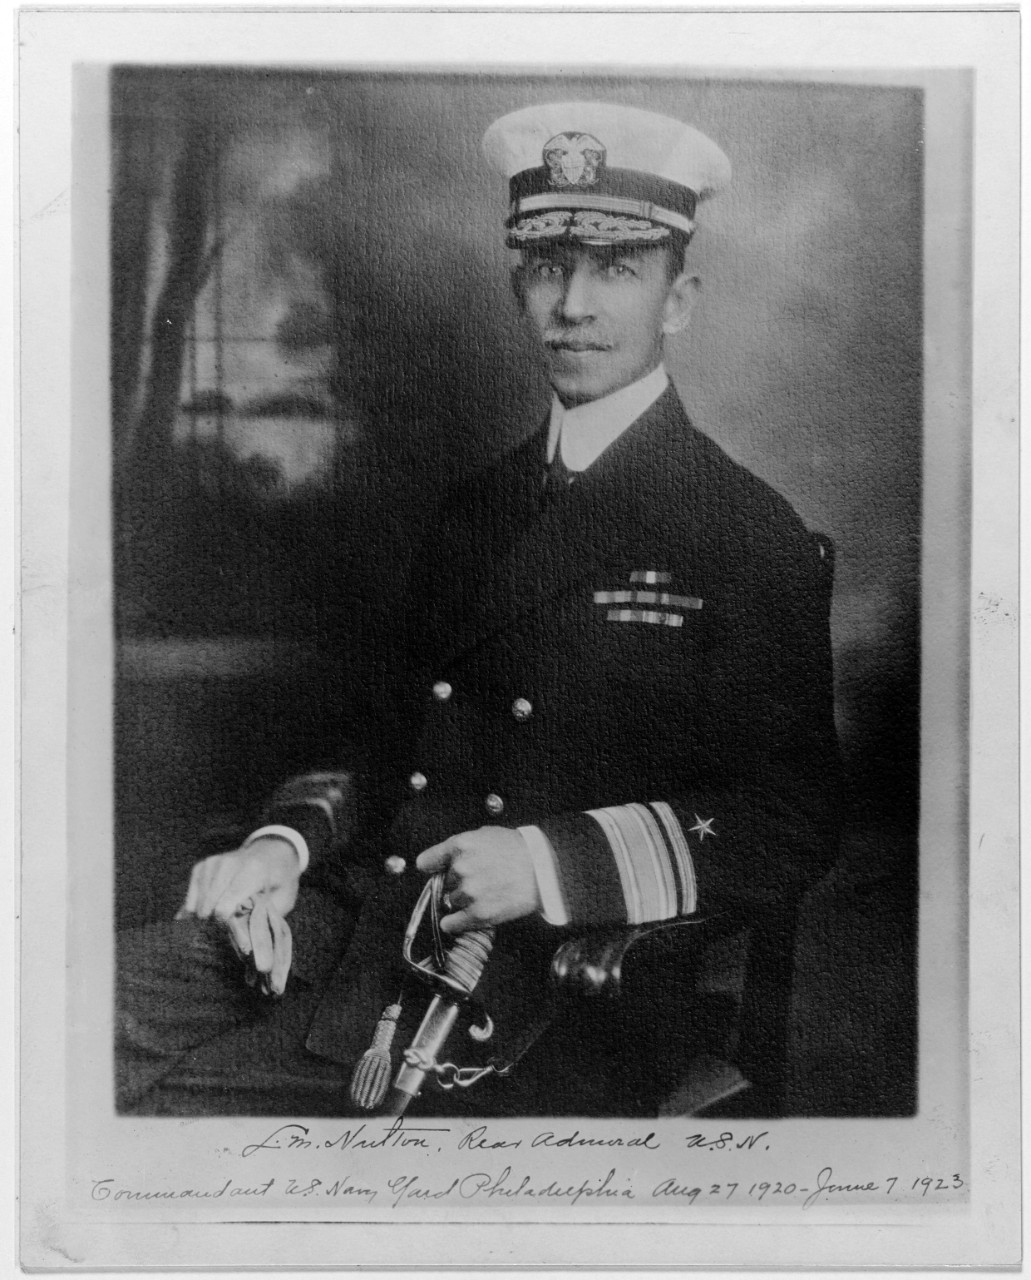 Rear Admiral Louis McC. Nulton, USN